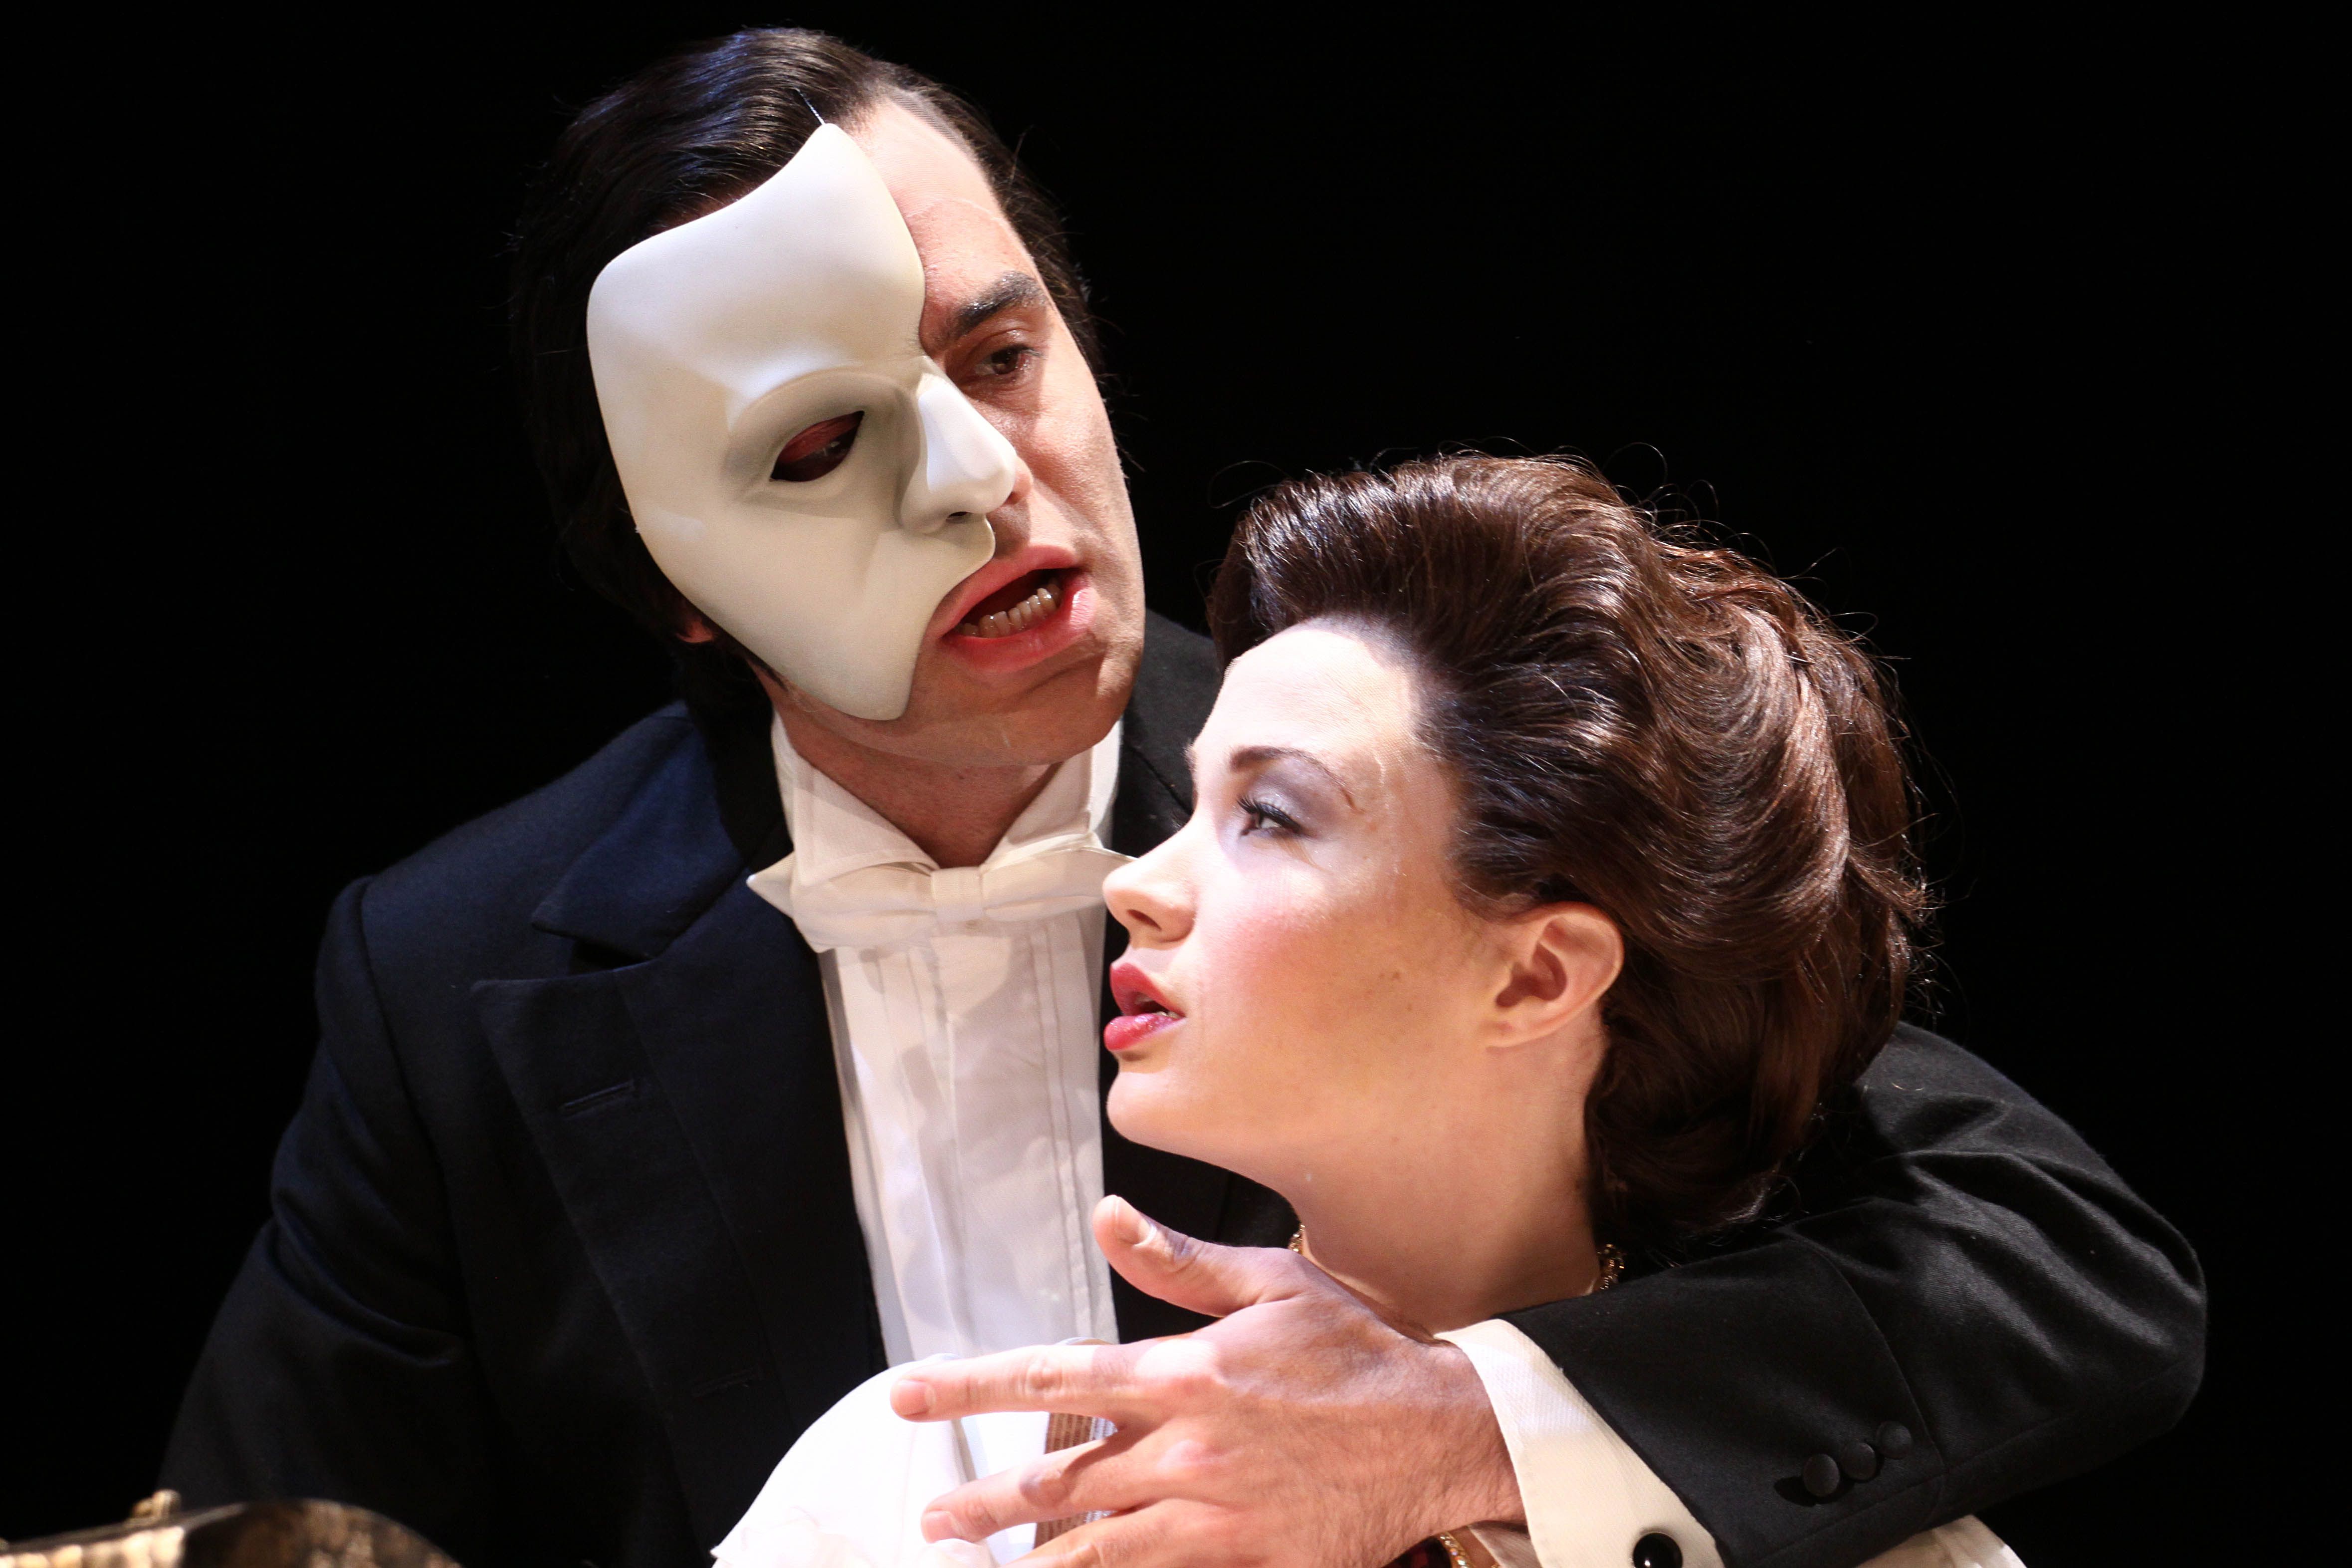 phantom of the opera movie online free